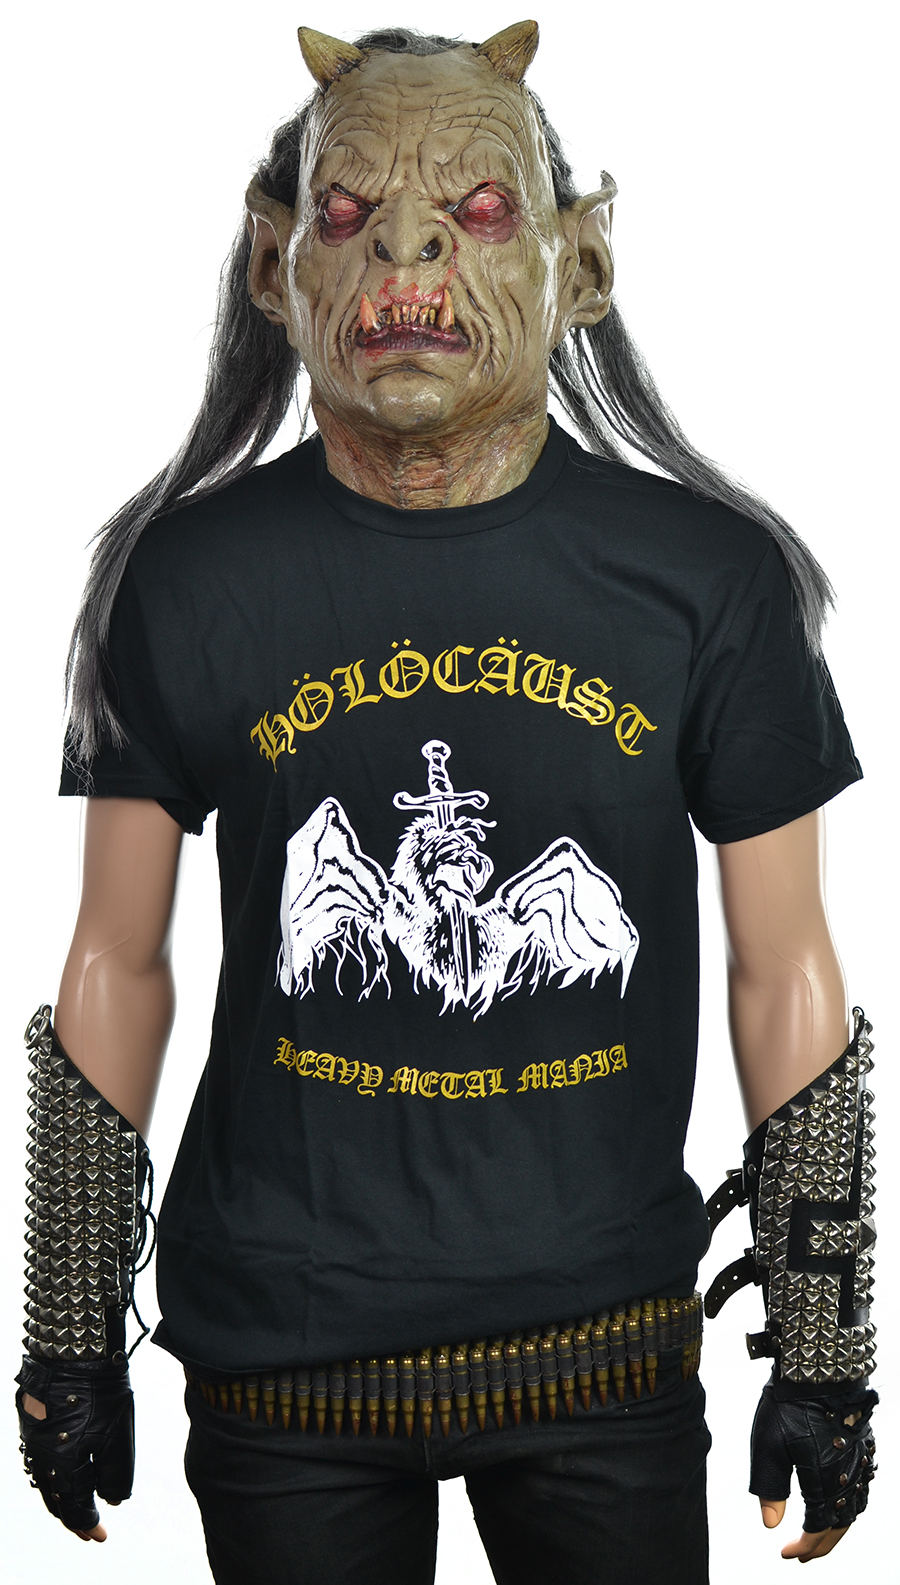 Holocaust Heavy Metal Mania T Shirt